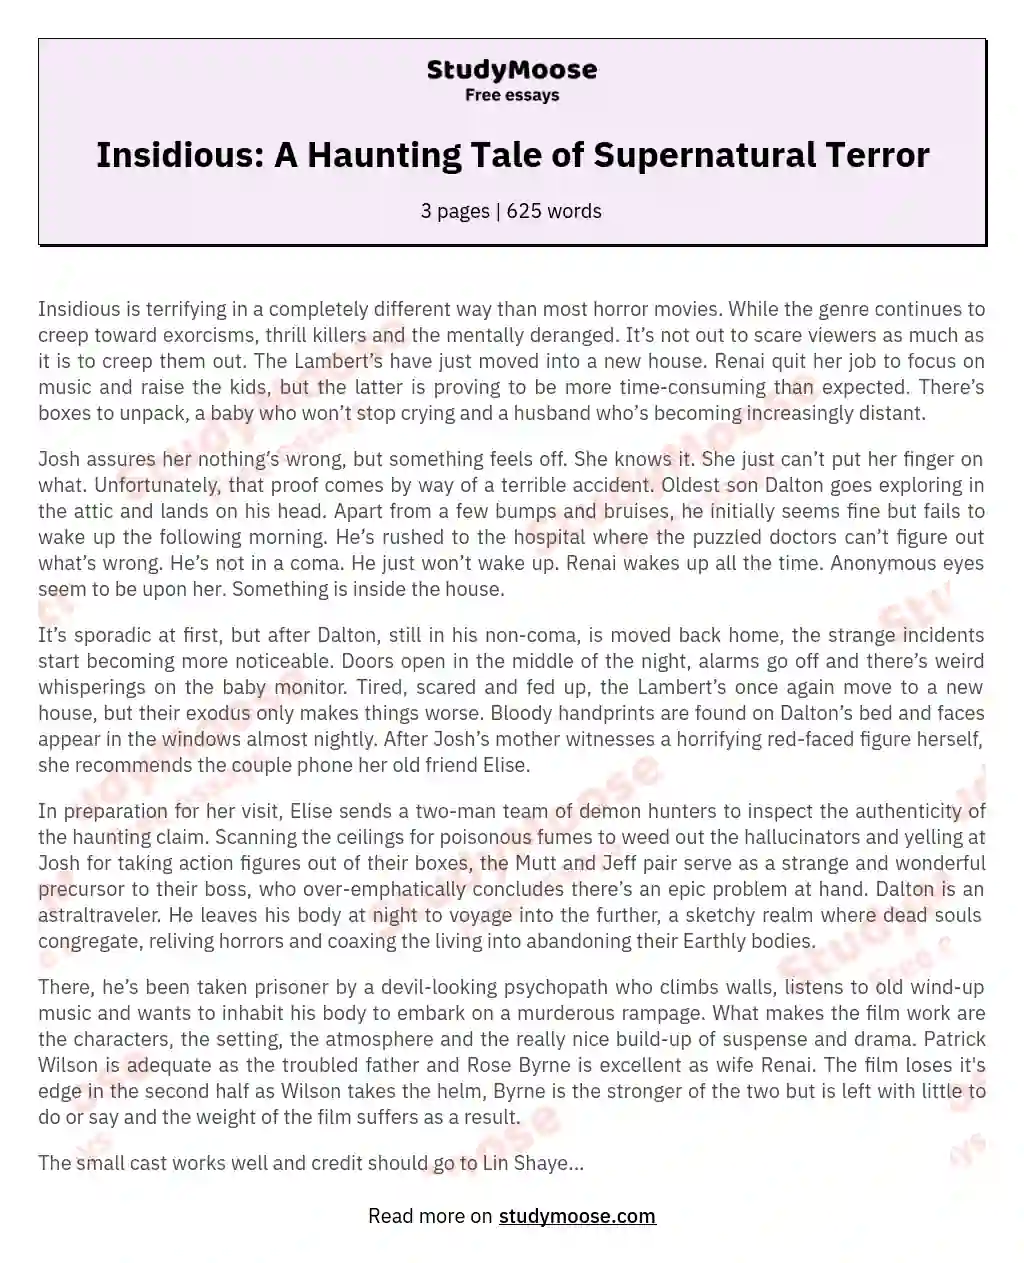 Insidious: A Haunting Tale of Supernatural Terror essay